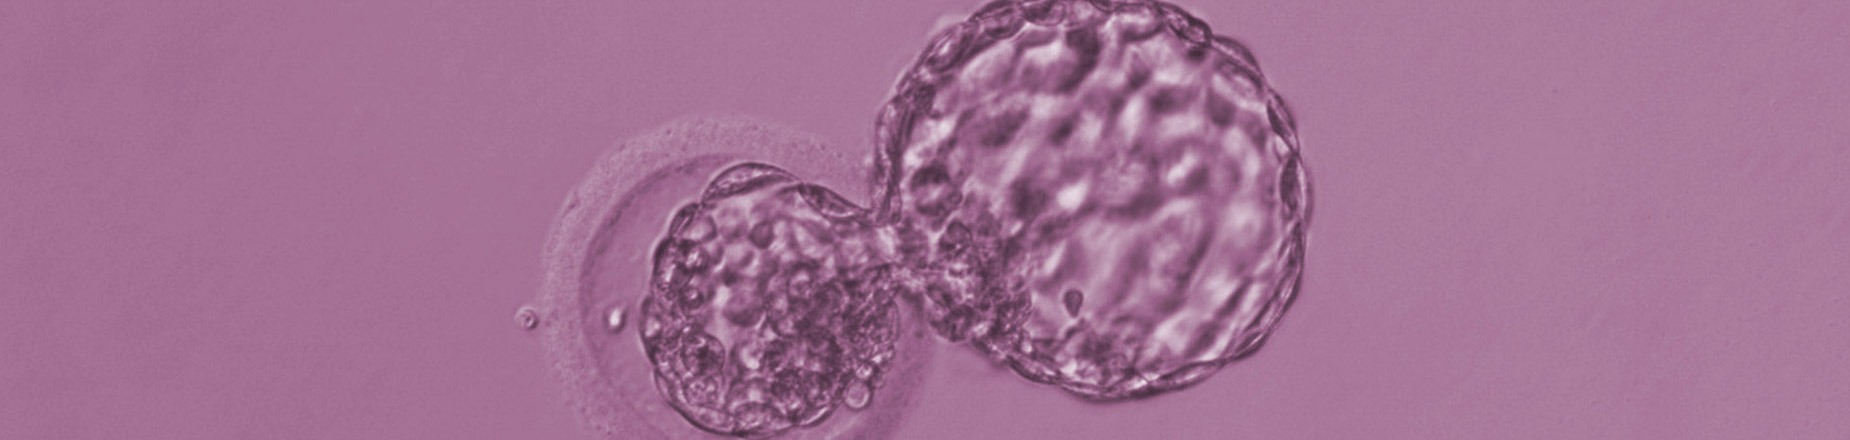 Embryo / Blastocyst Hatching